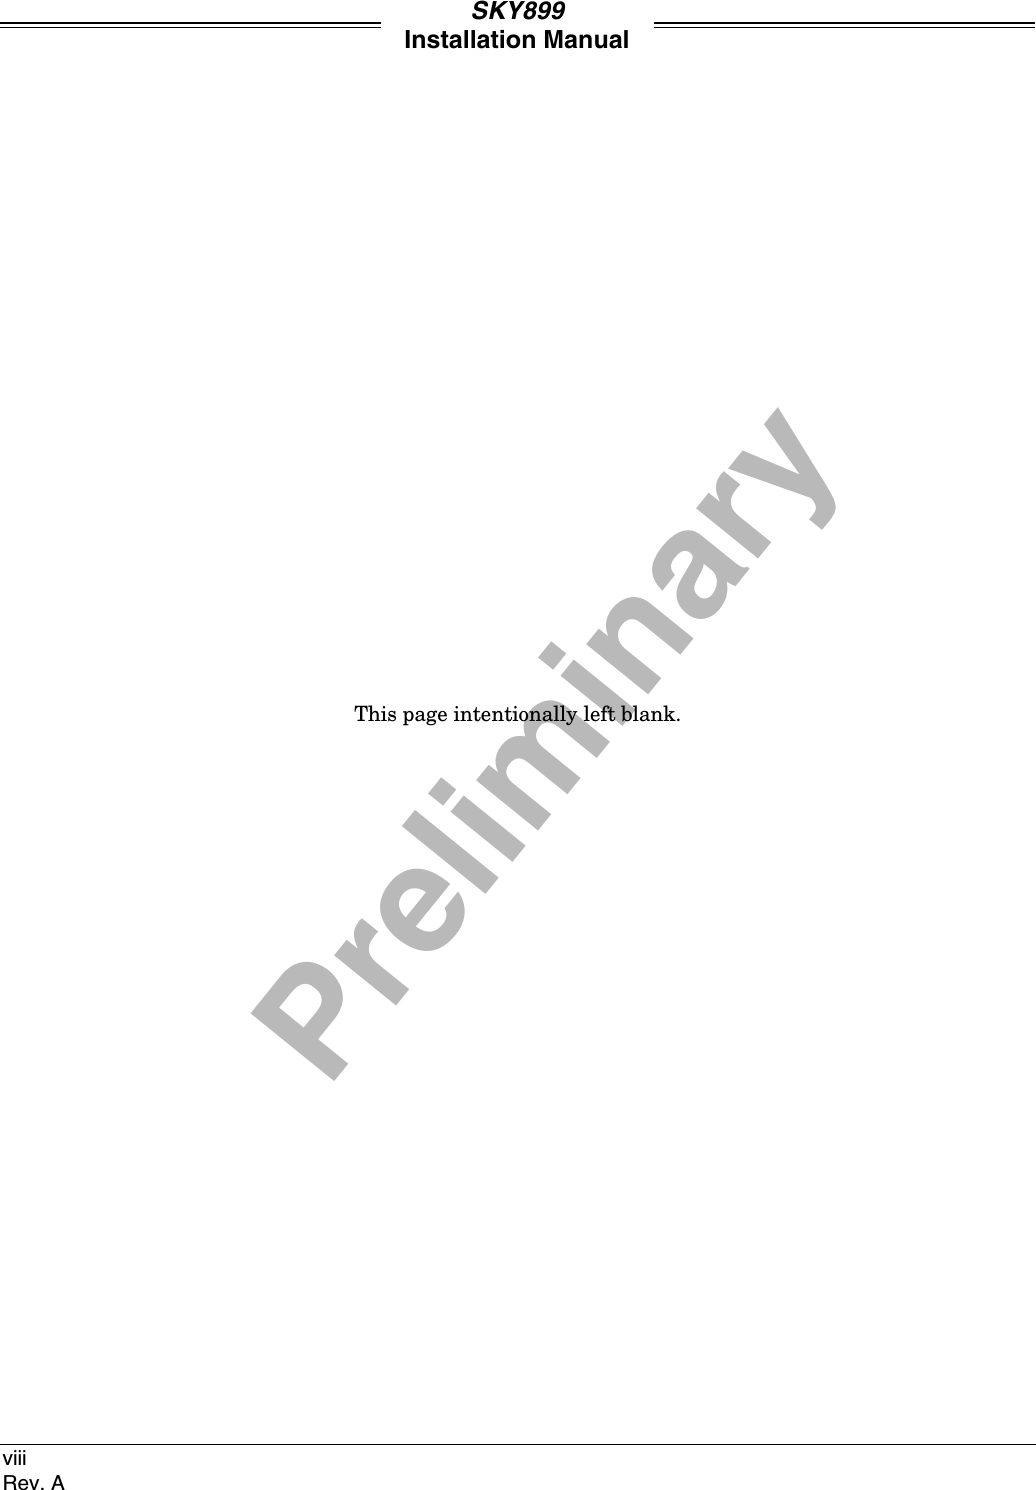 PreliminarySKY899Installation ManualviiiRev. AThis page intentionally left blank.